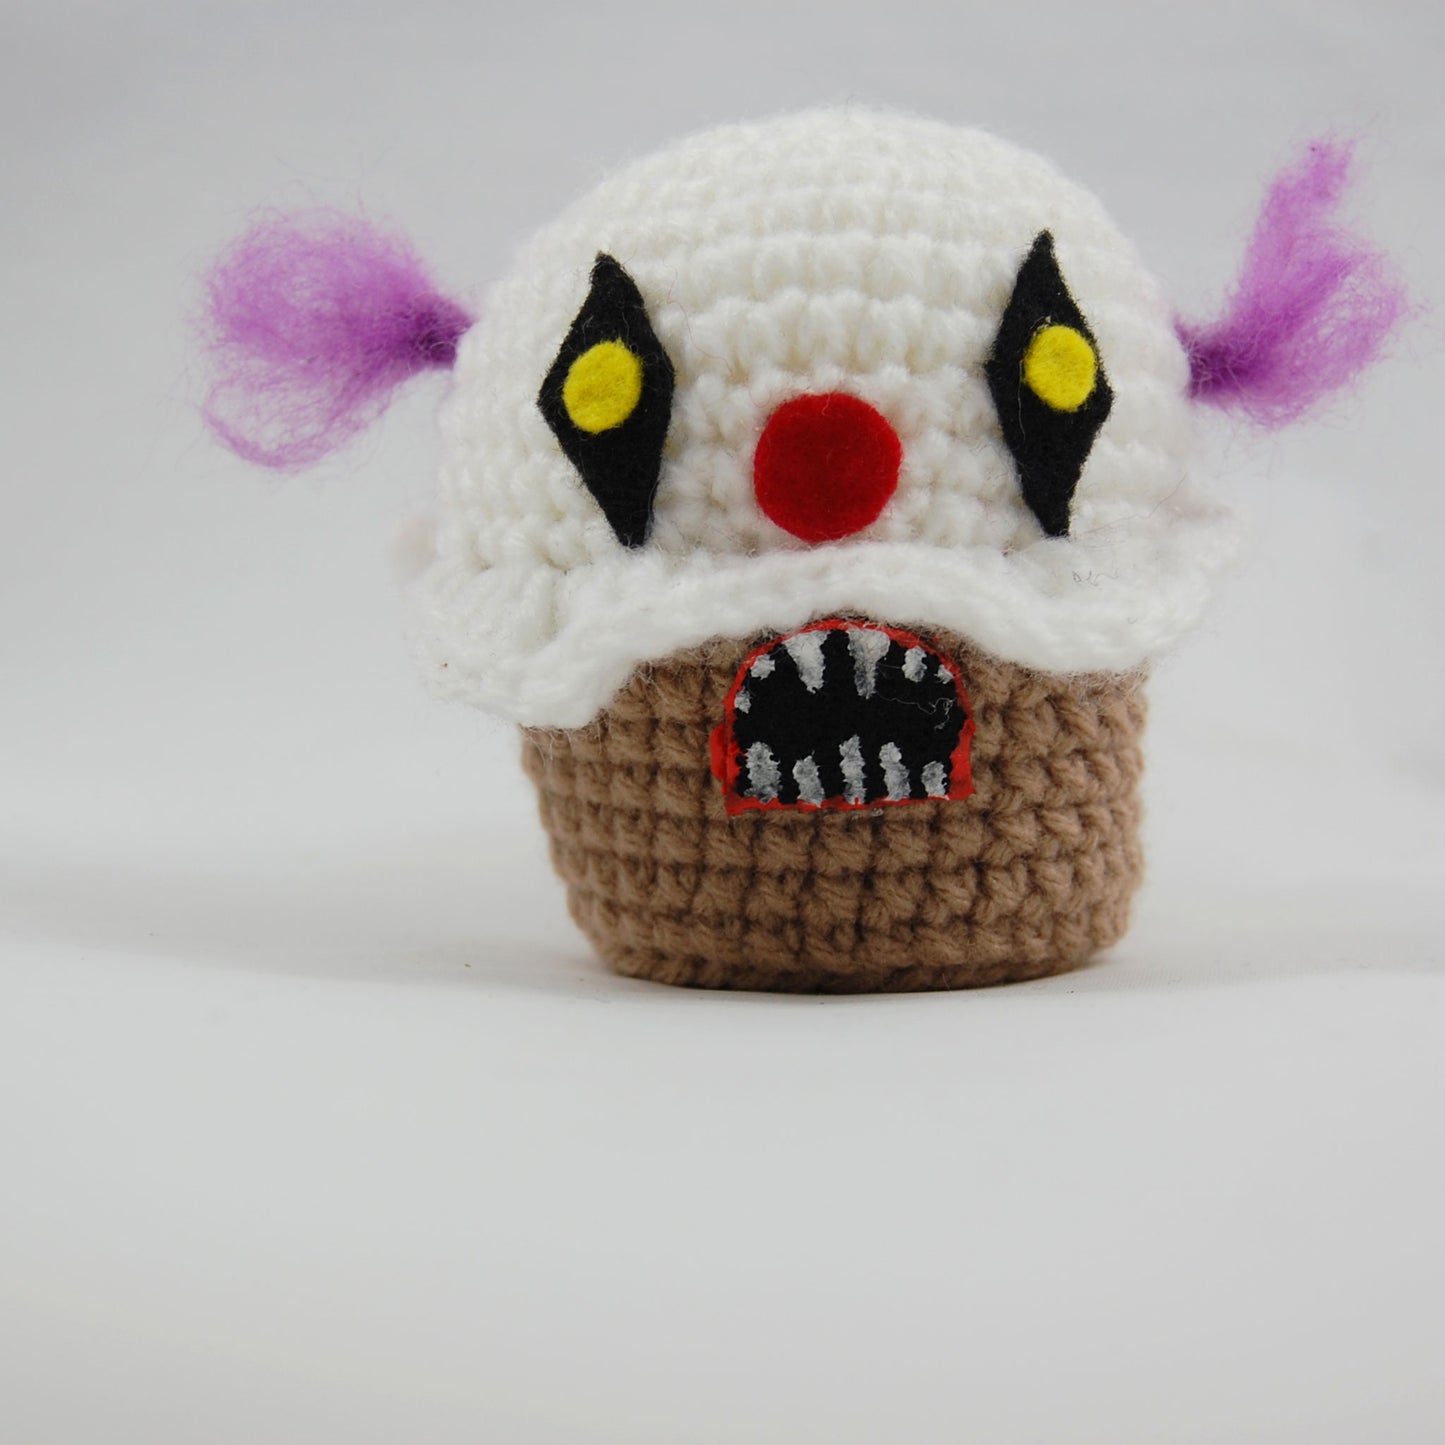 Creepy Clown Cupcake